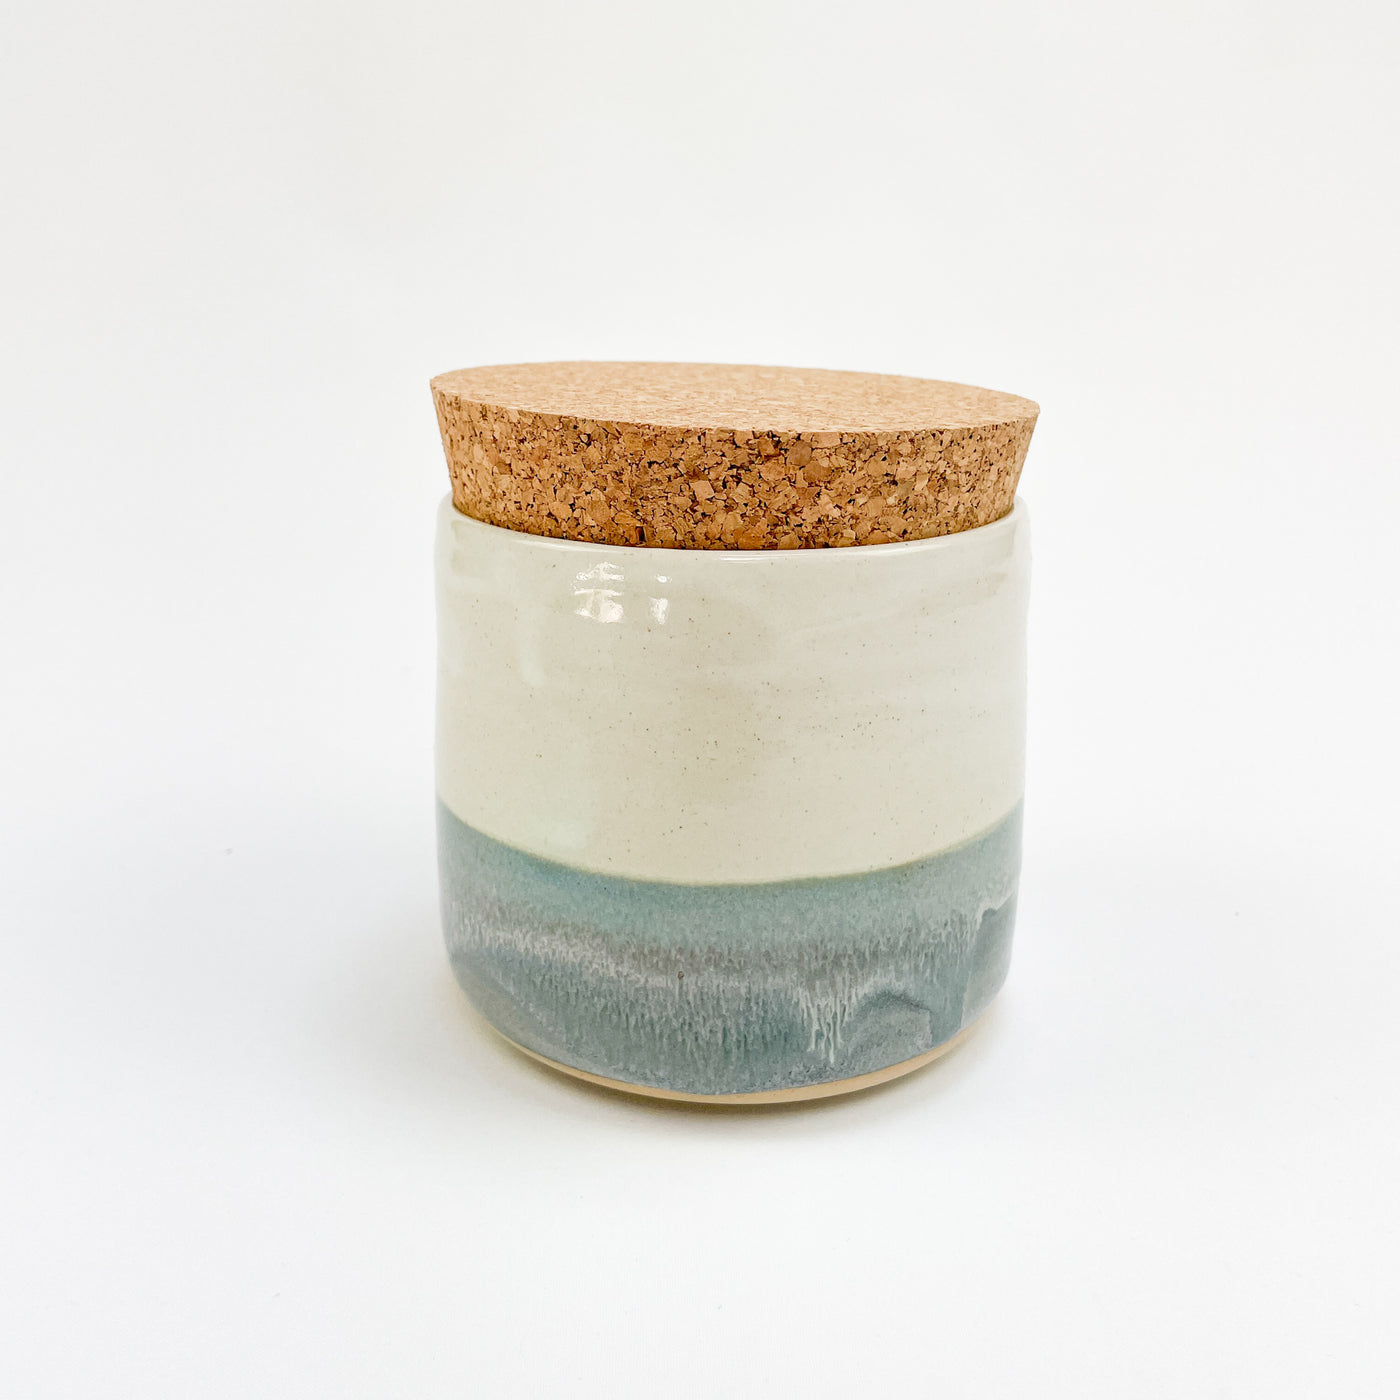 Ceramic treat jar with lid in a two-tone speckled grey glaze